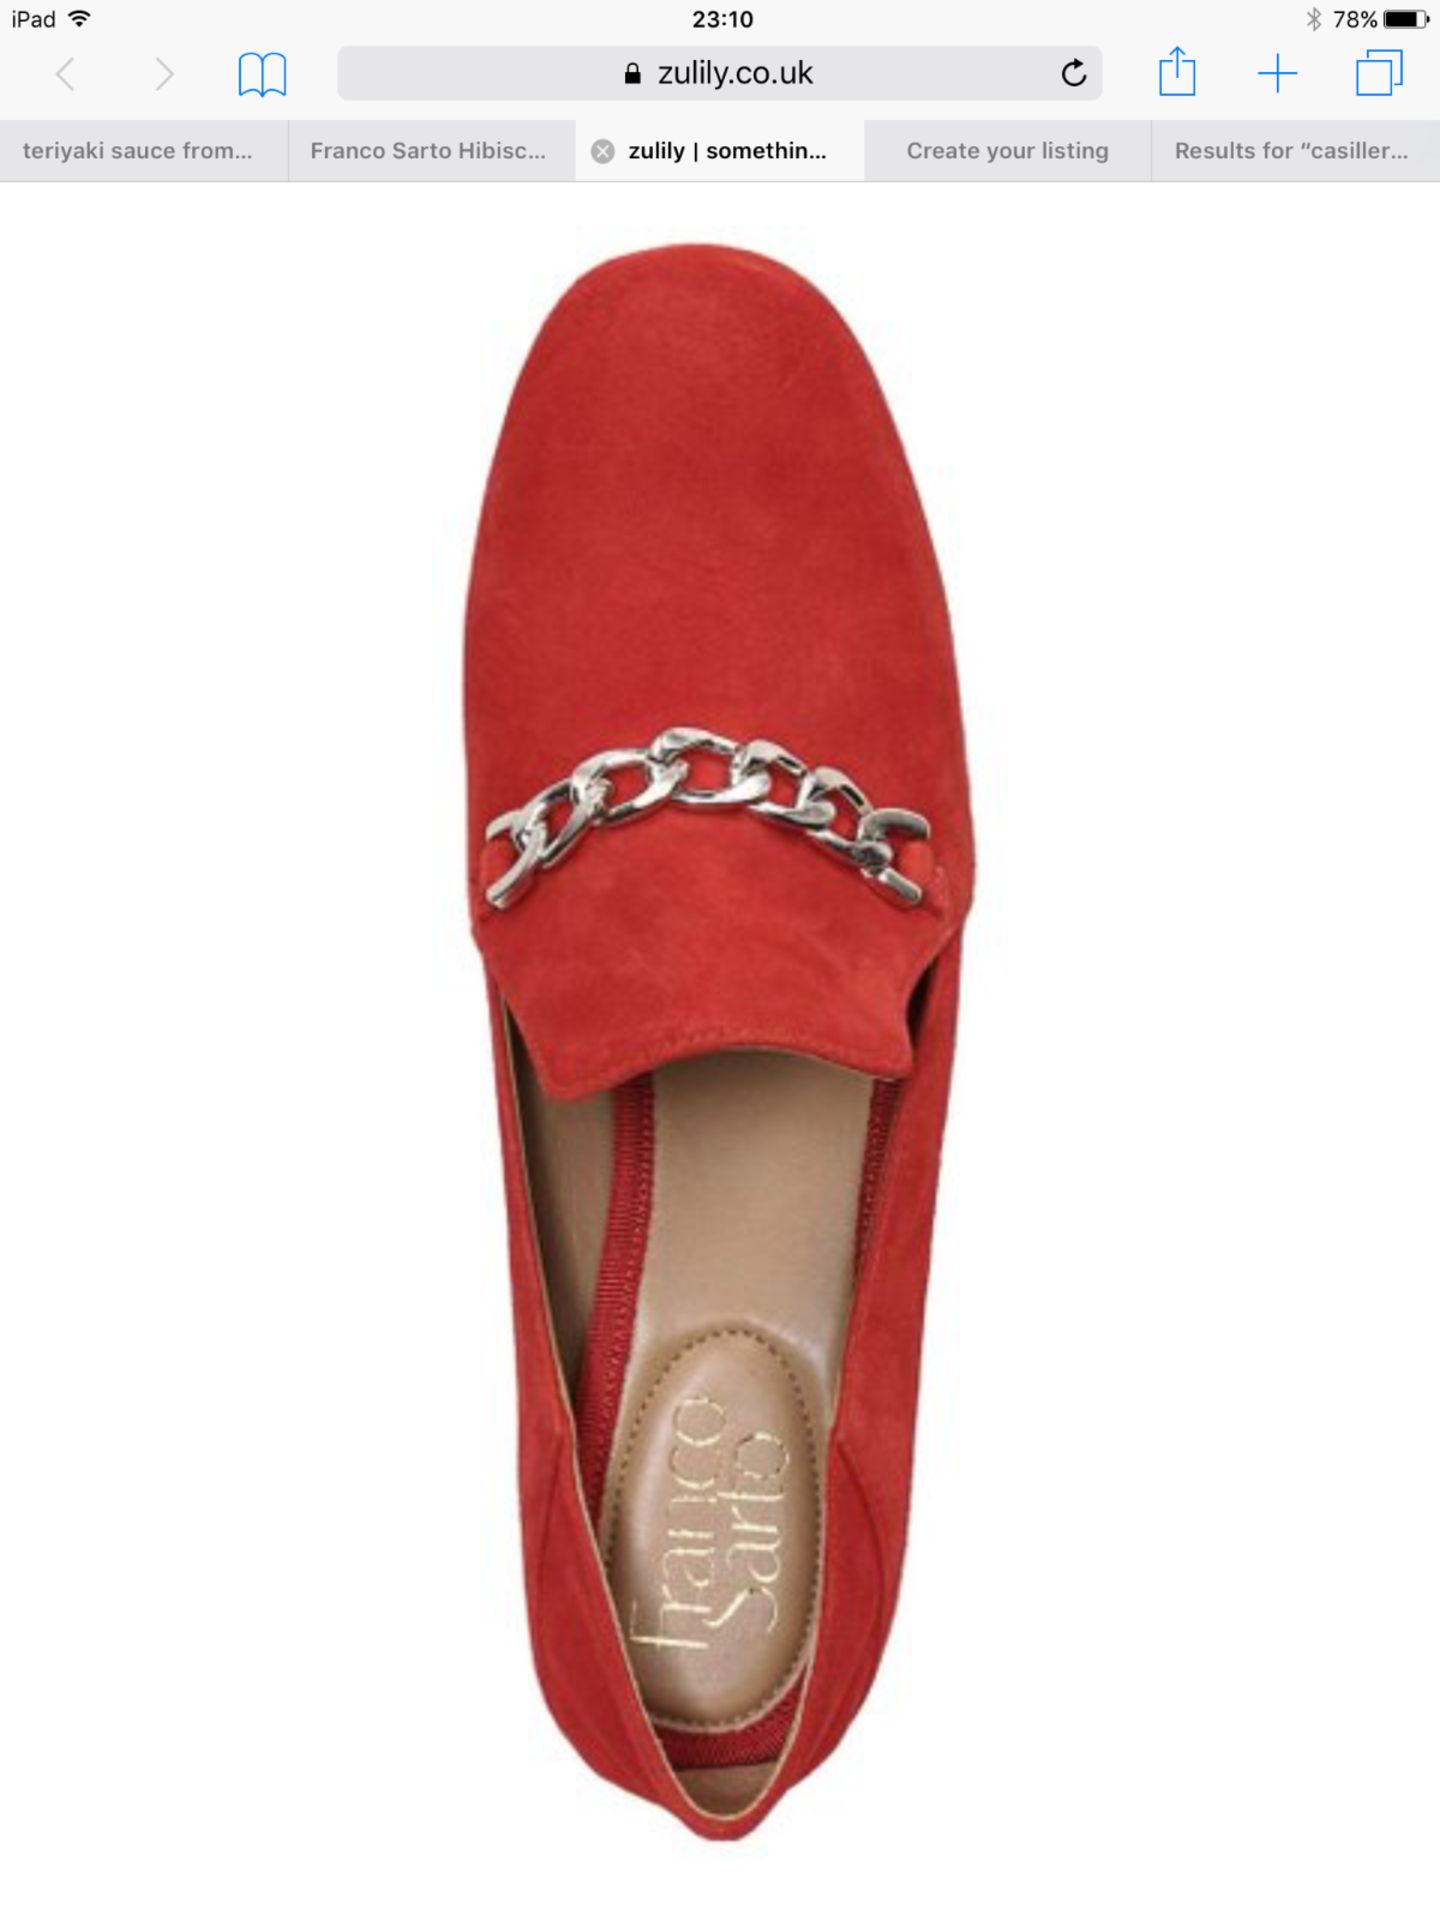 Franco Sarto Hibiscus Red Layola Shoe, Size Uk 5.5-6 (New With Box) [Ref: 55491910 I004] - Image 4 of 6